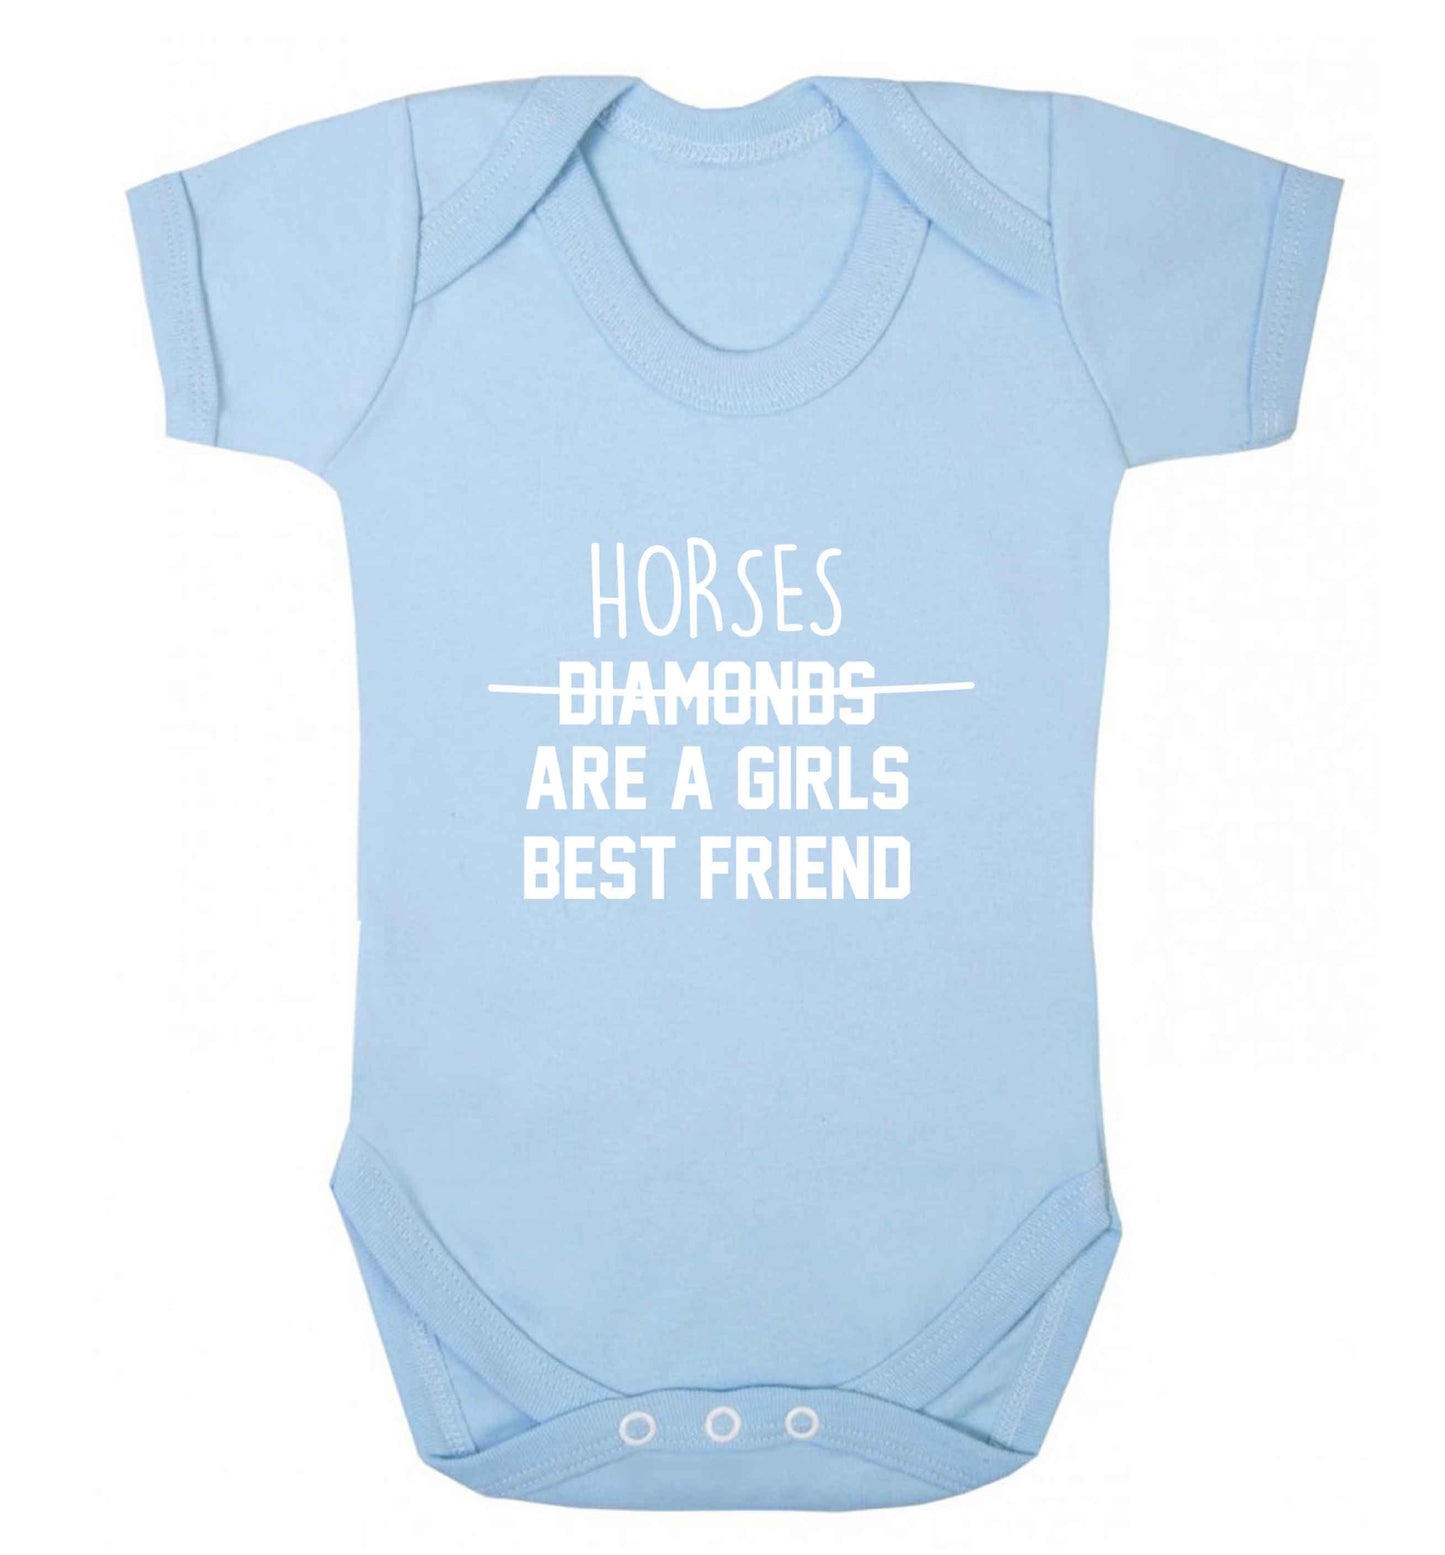 Horses are a girls best friend baby vest pale blue 18-24 months